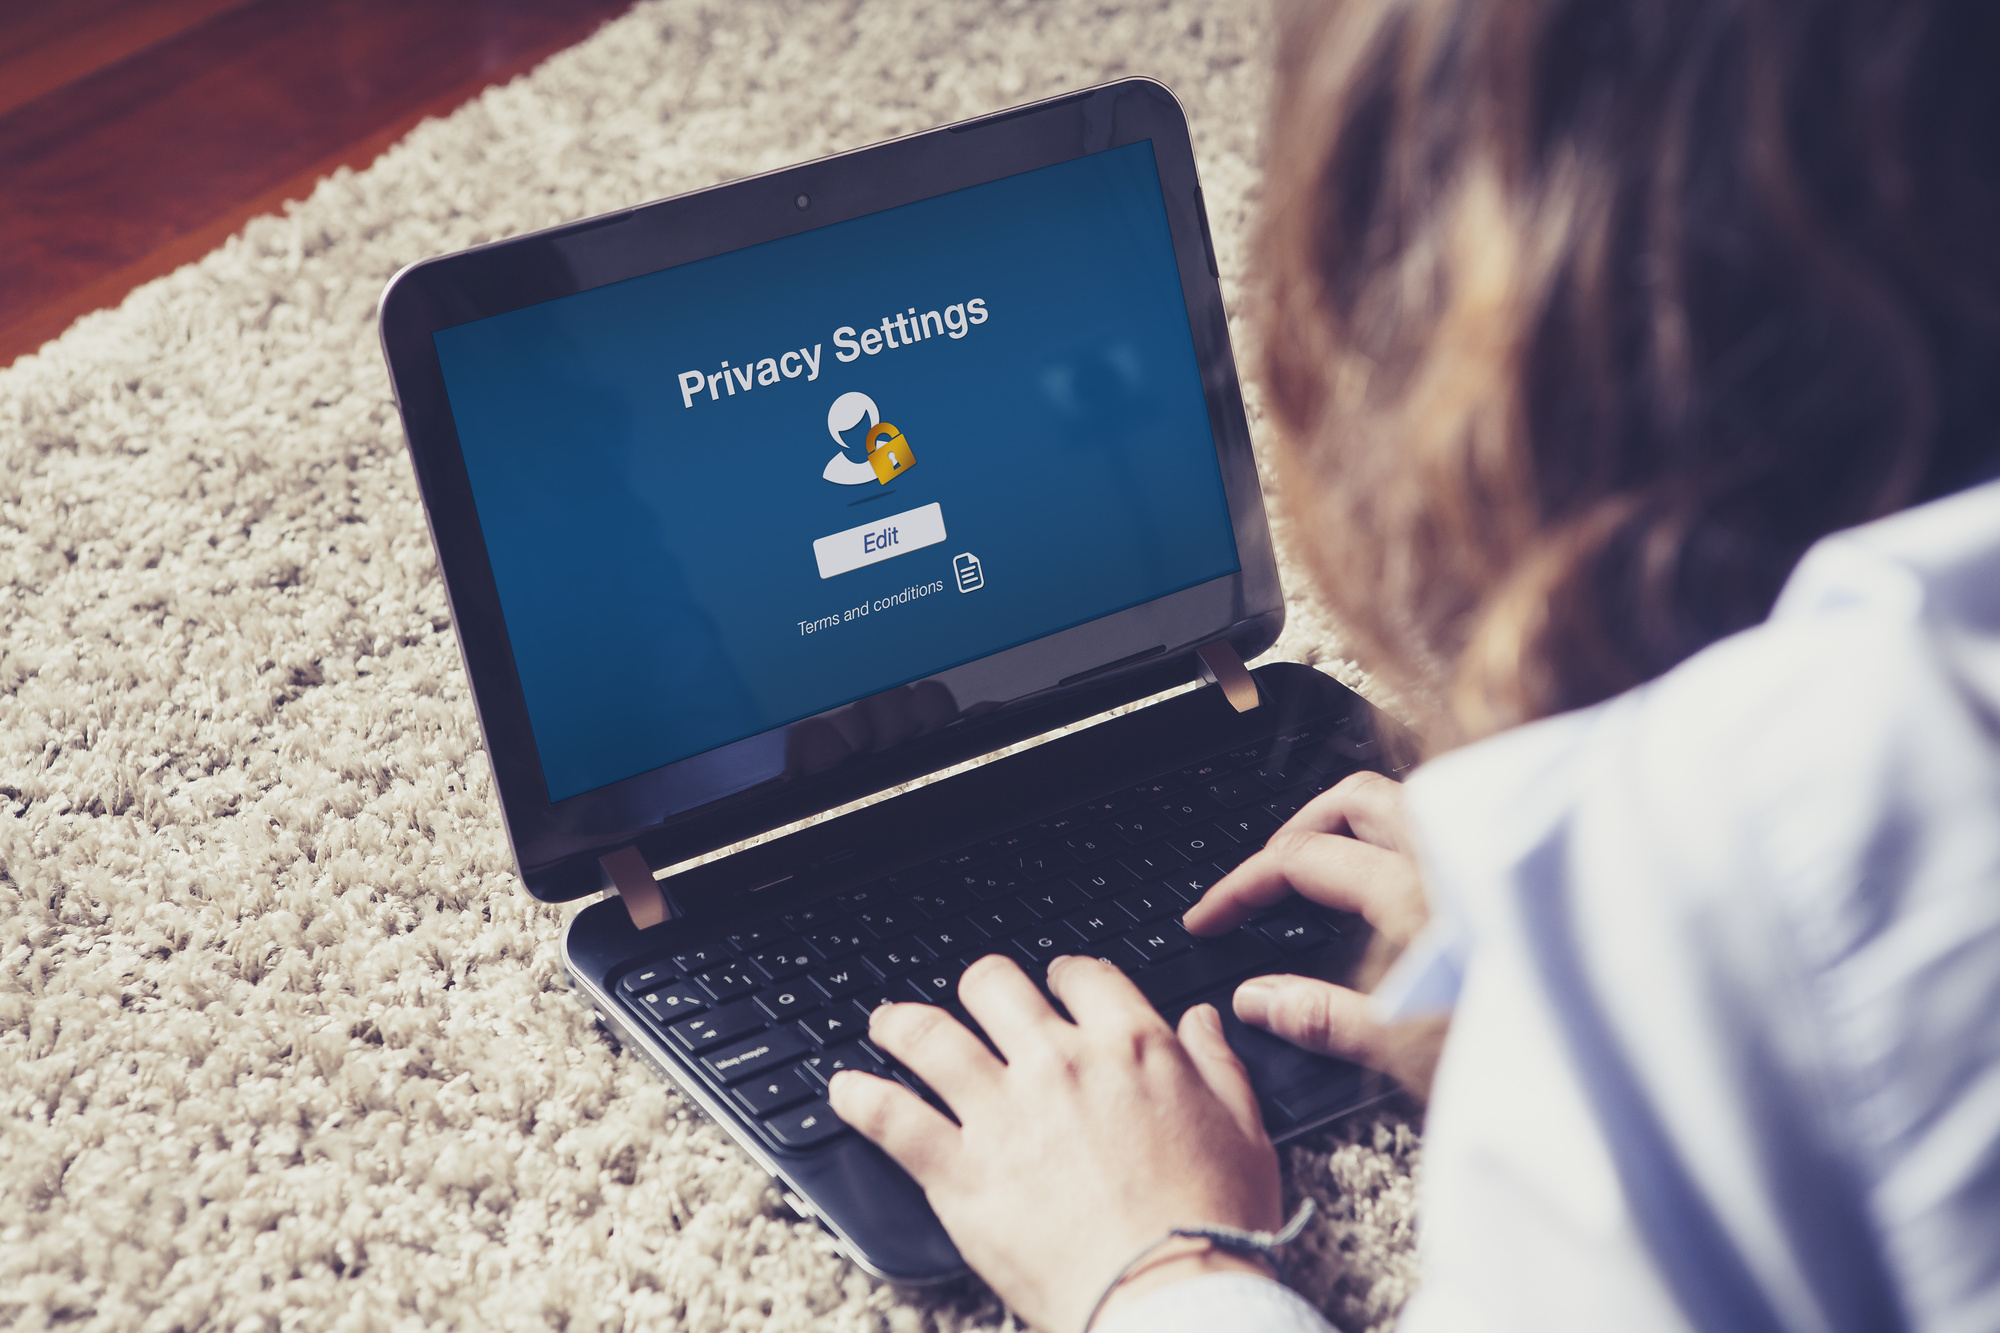 social media privacy settings on laptop screen